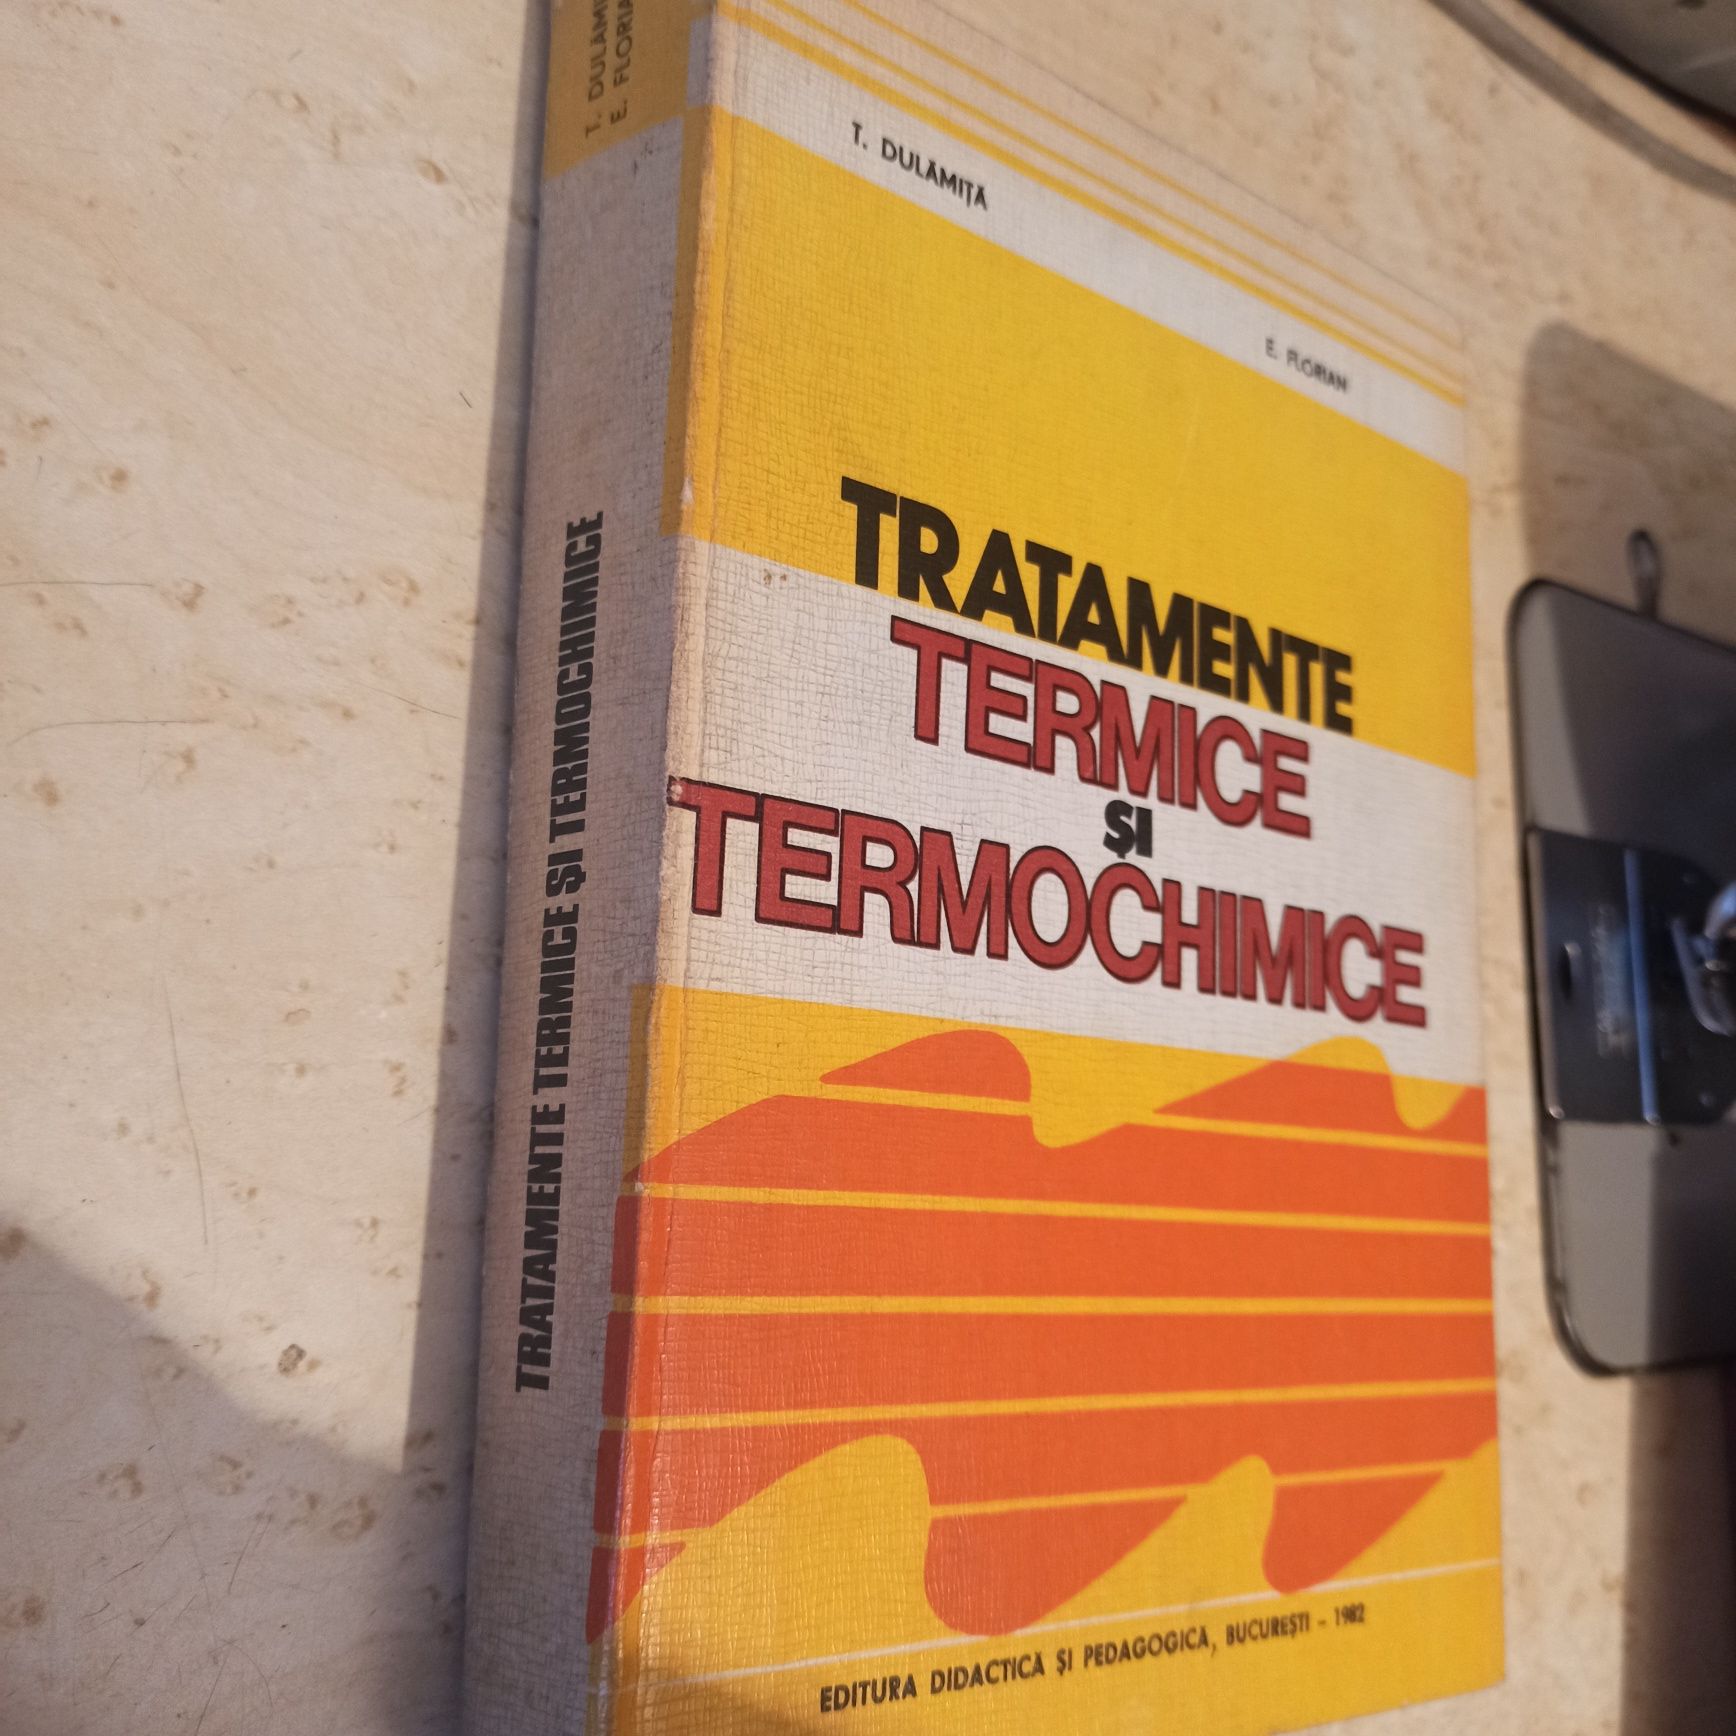 Tratamente termice și termochimice